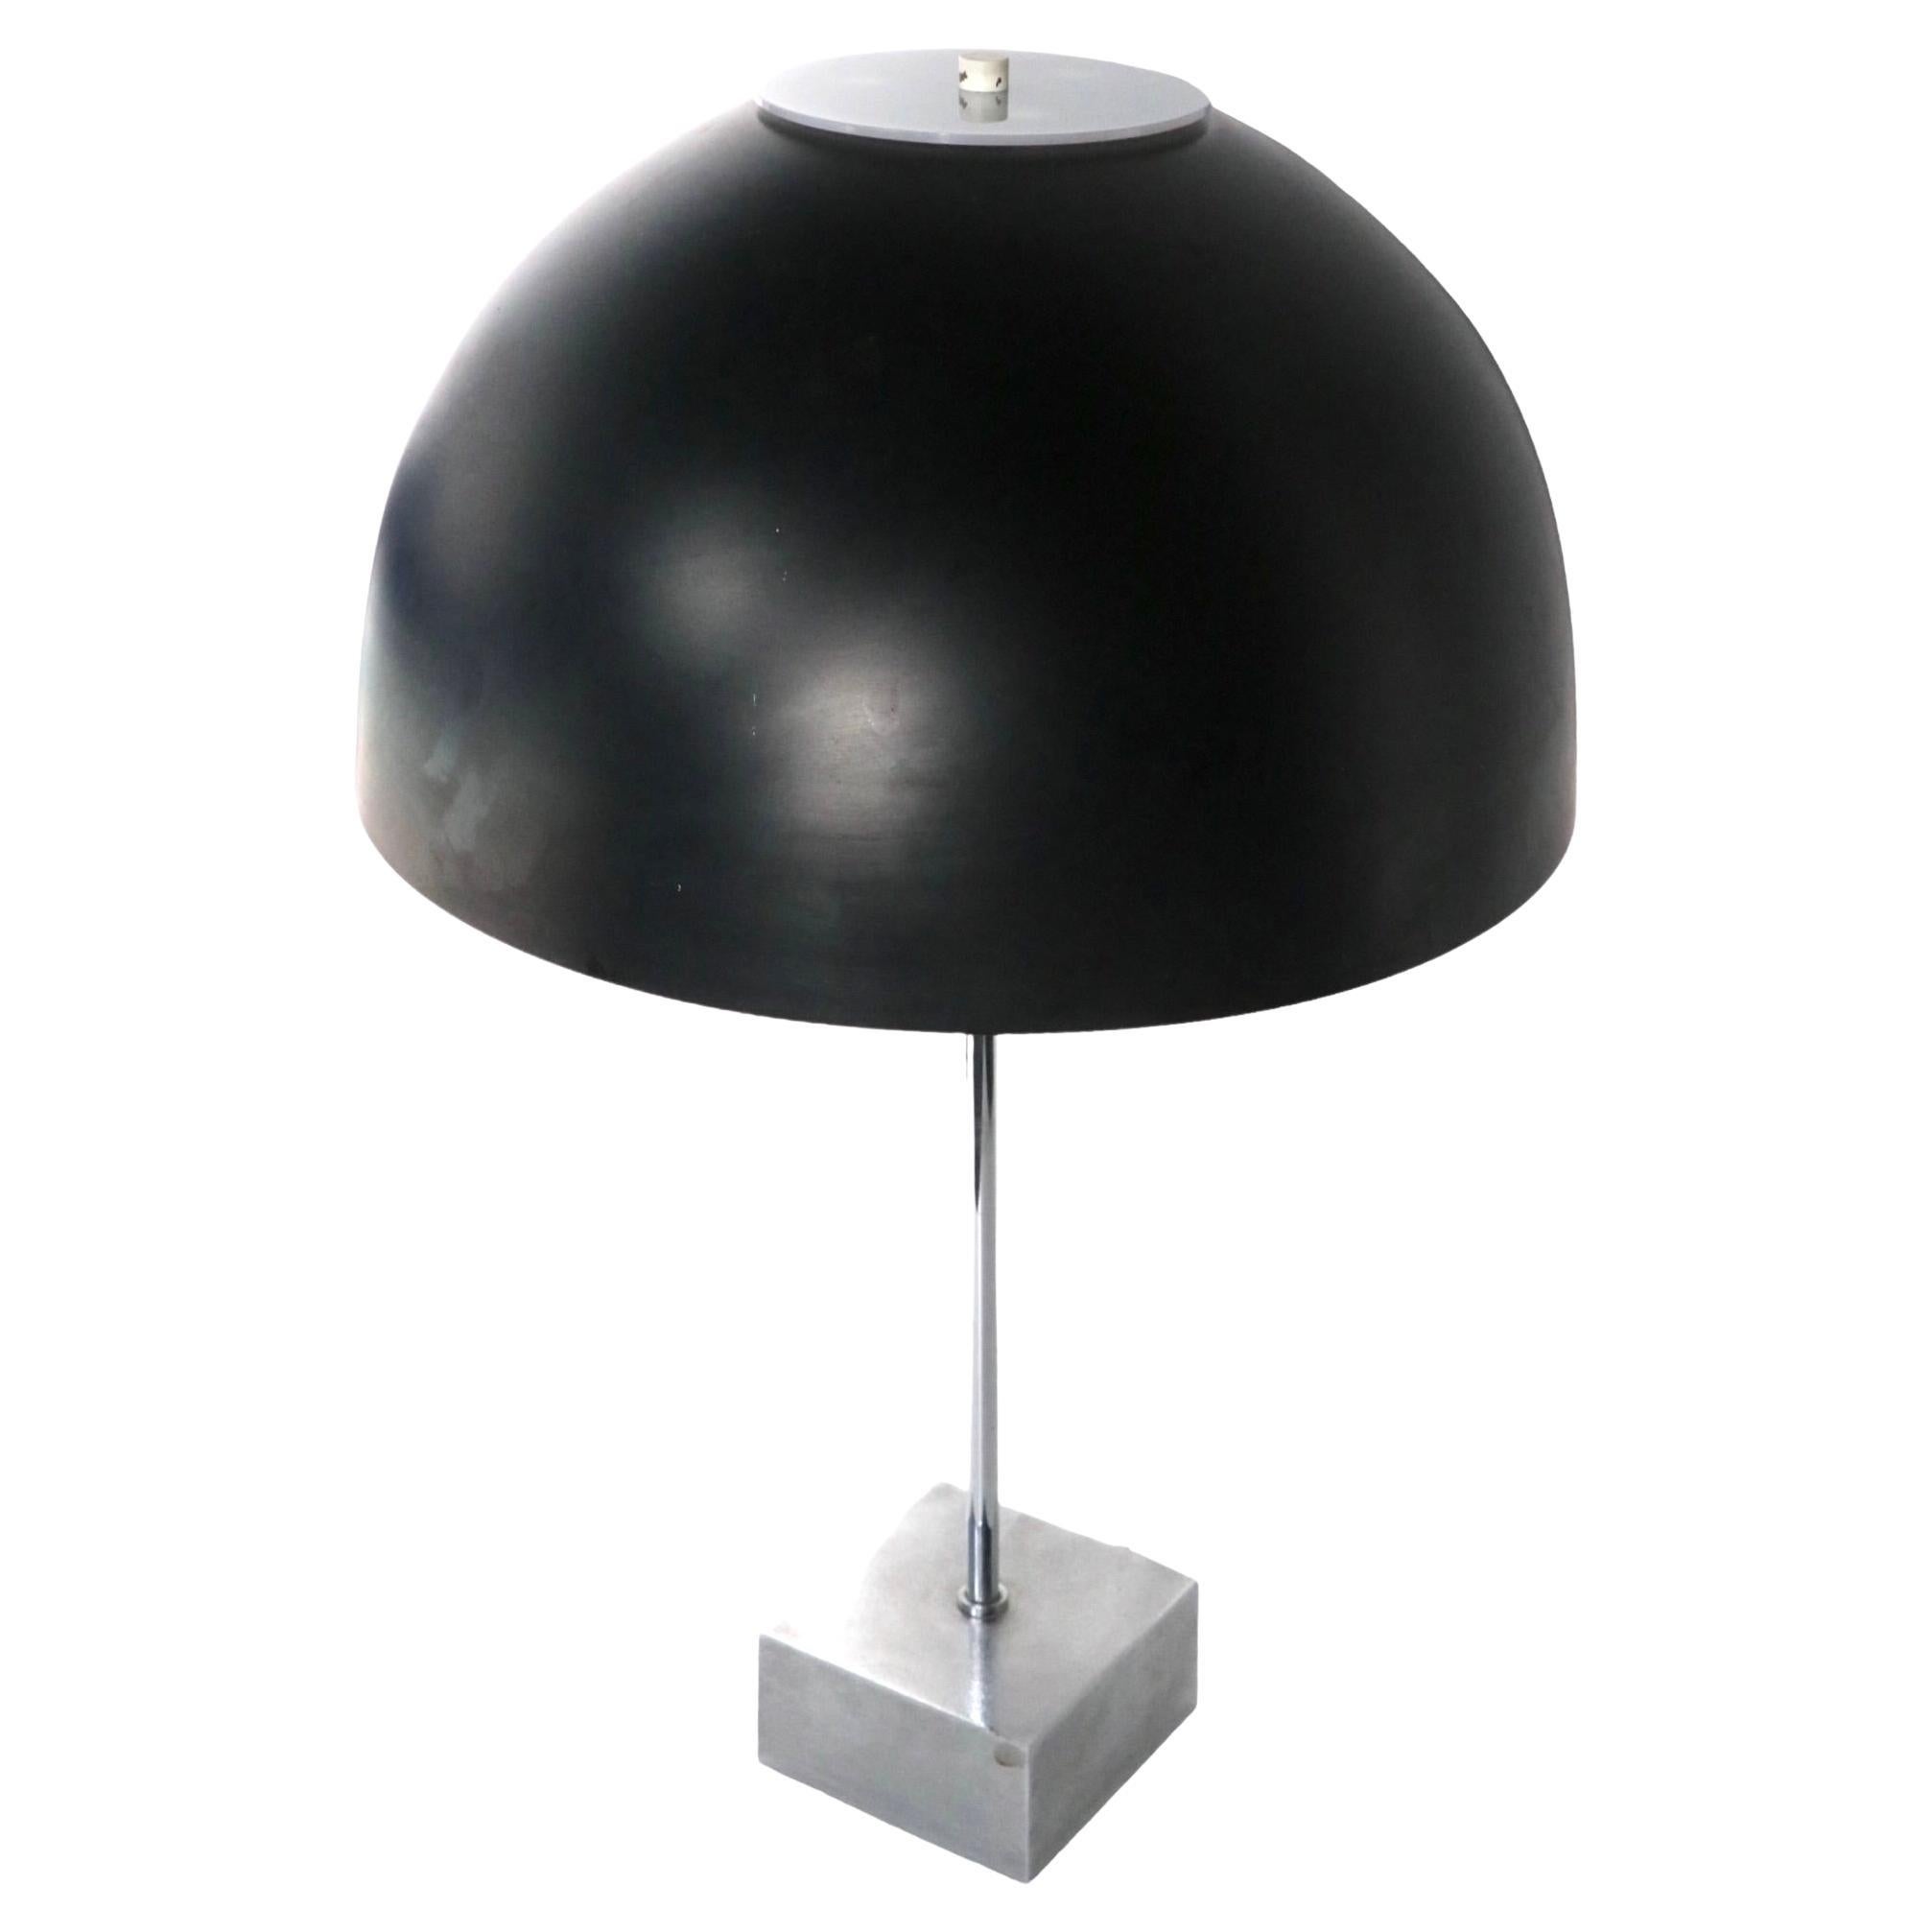 Modernist Dome Top Table Lamp by Paul Mayen for Habitat 